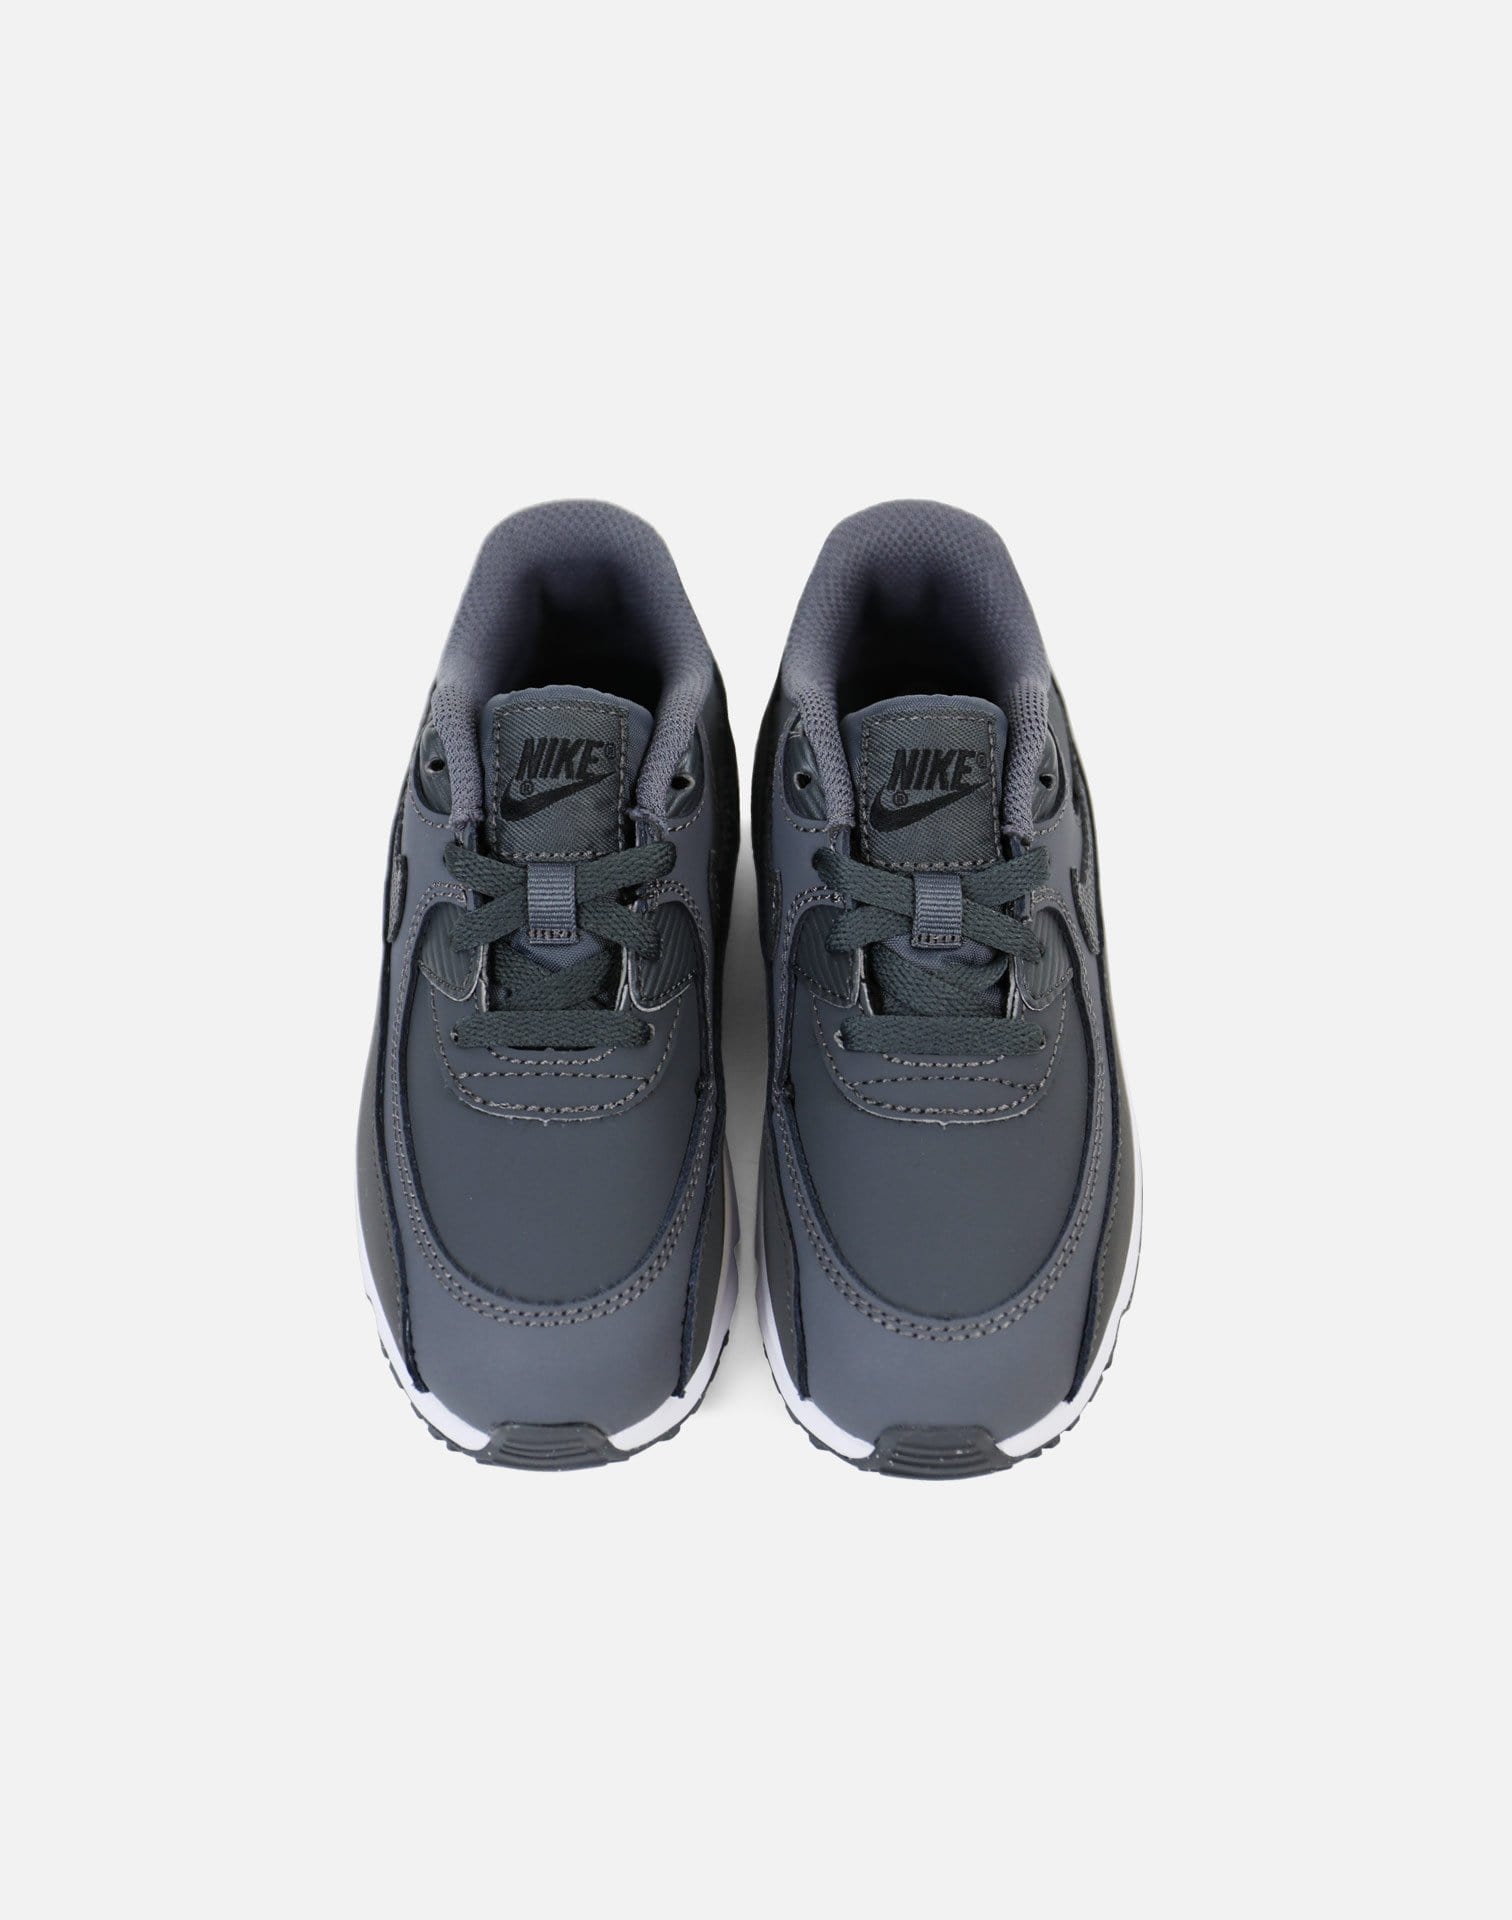 Nike Air Max '90 Leather Infant (Dark Grey/Dark Grey-Black)